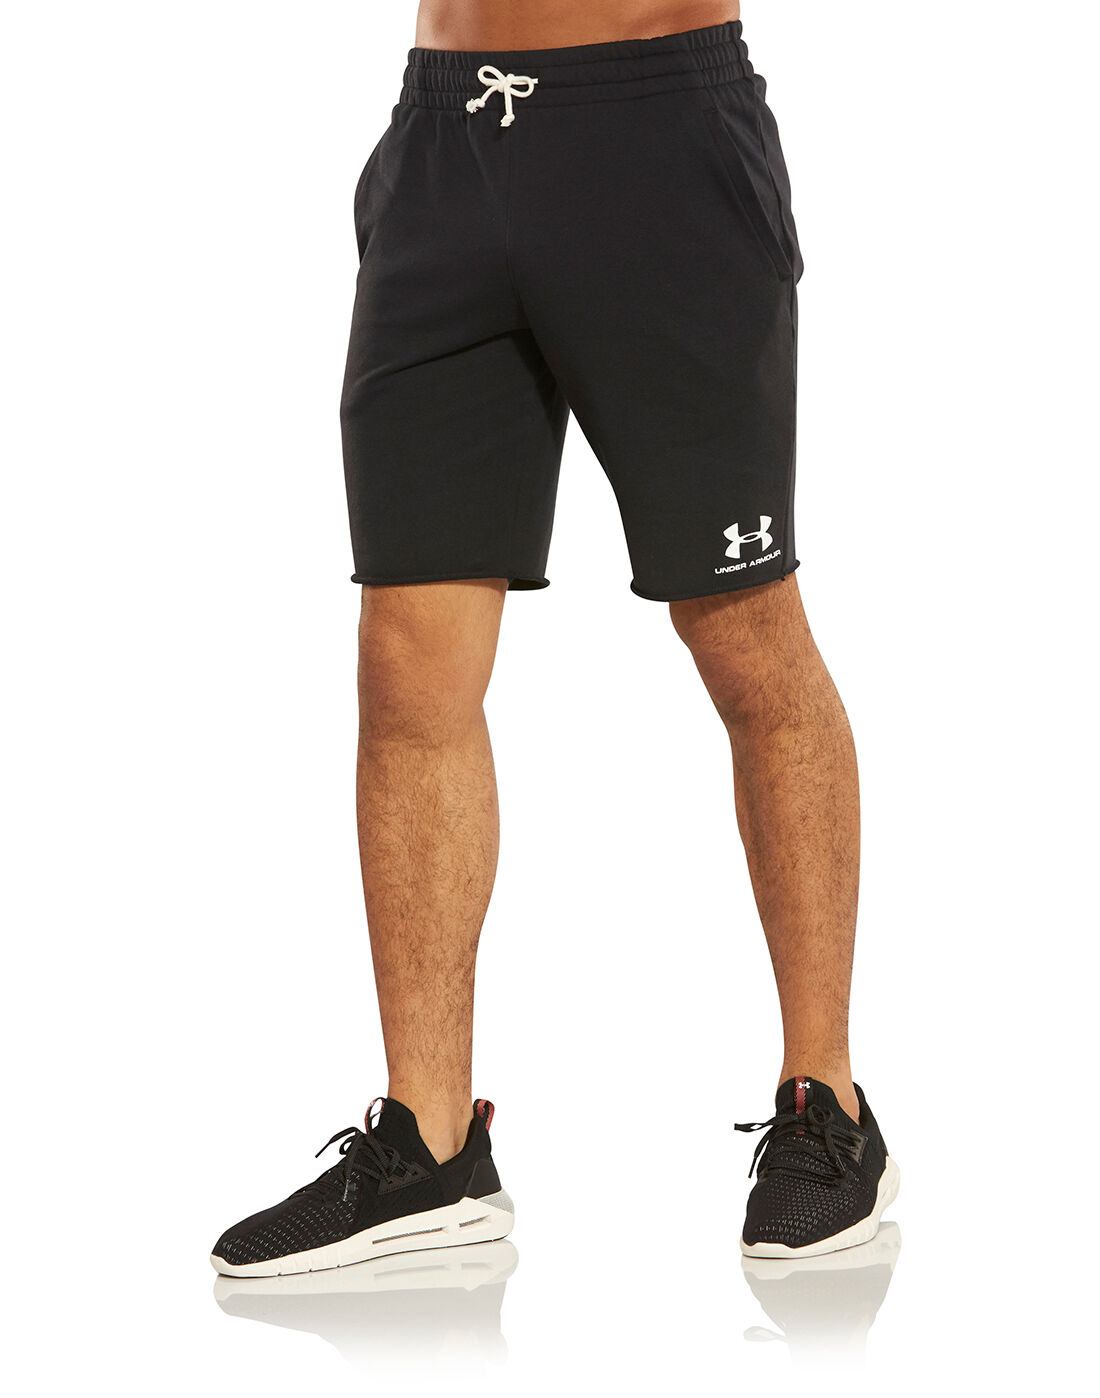 Men's Black Under Armour Gym Shorts 